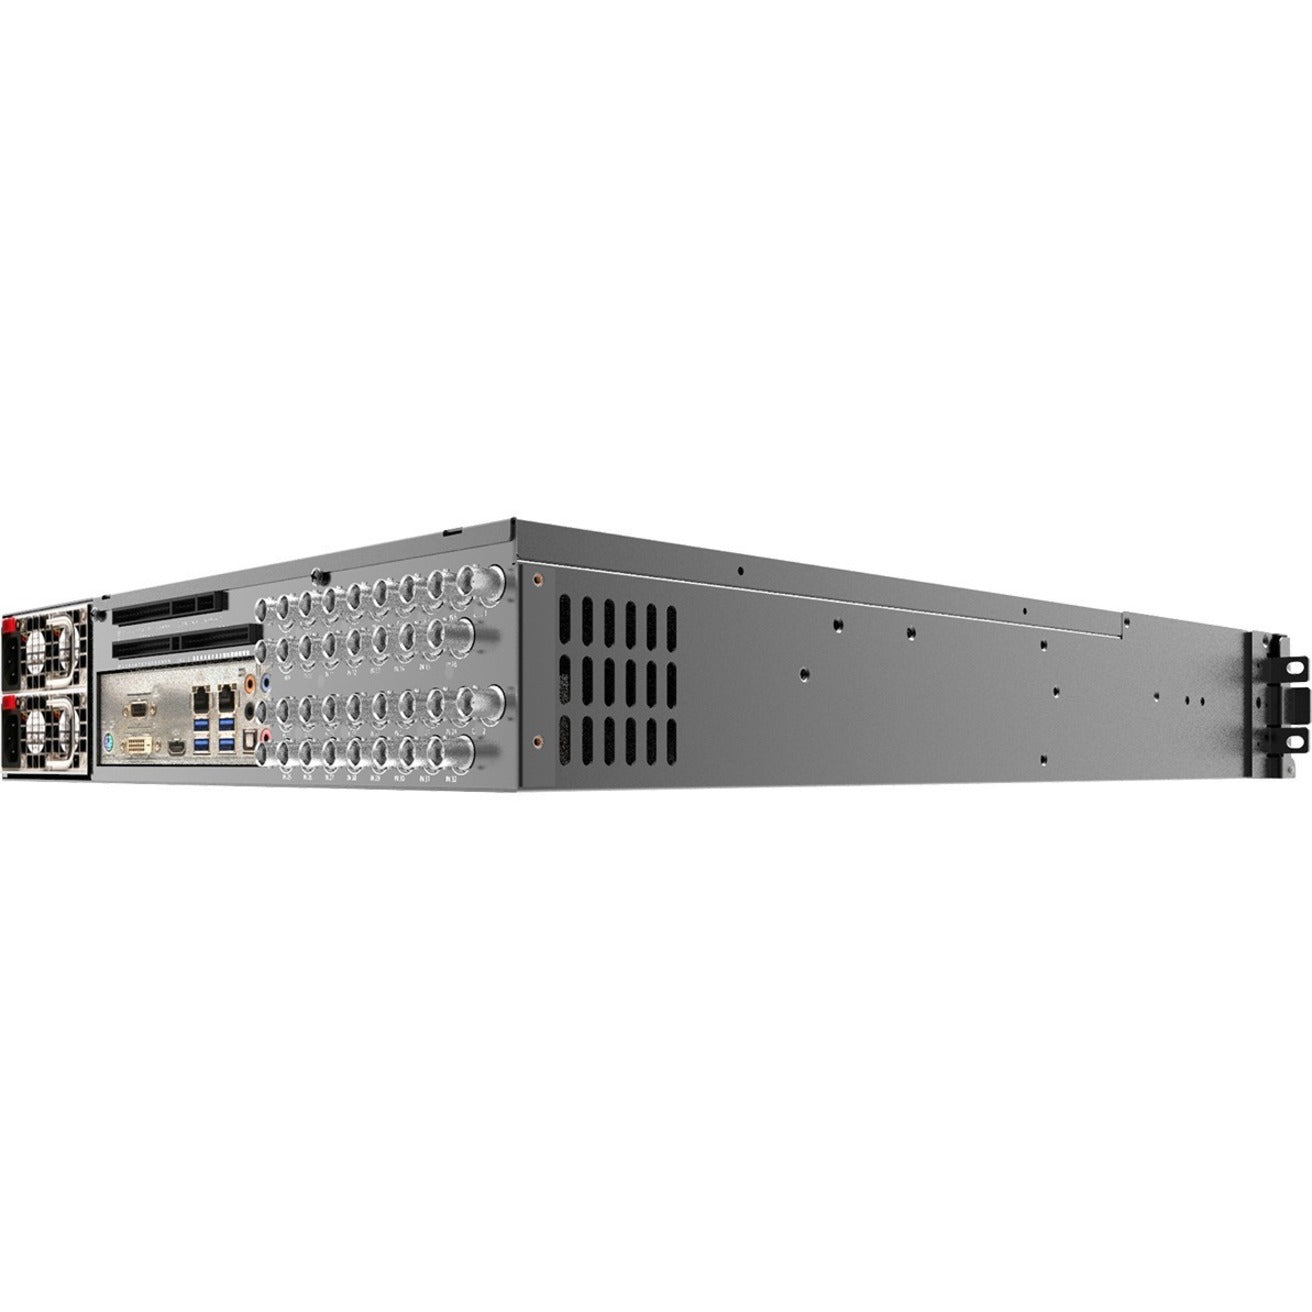 Exacq exacqVision Z Network Surveillance Server - 30 TB HDD